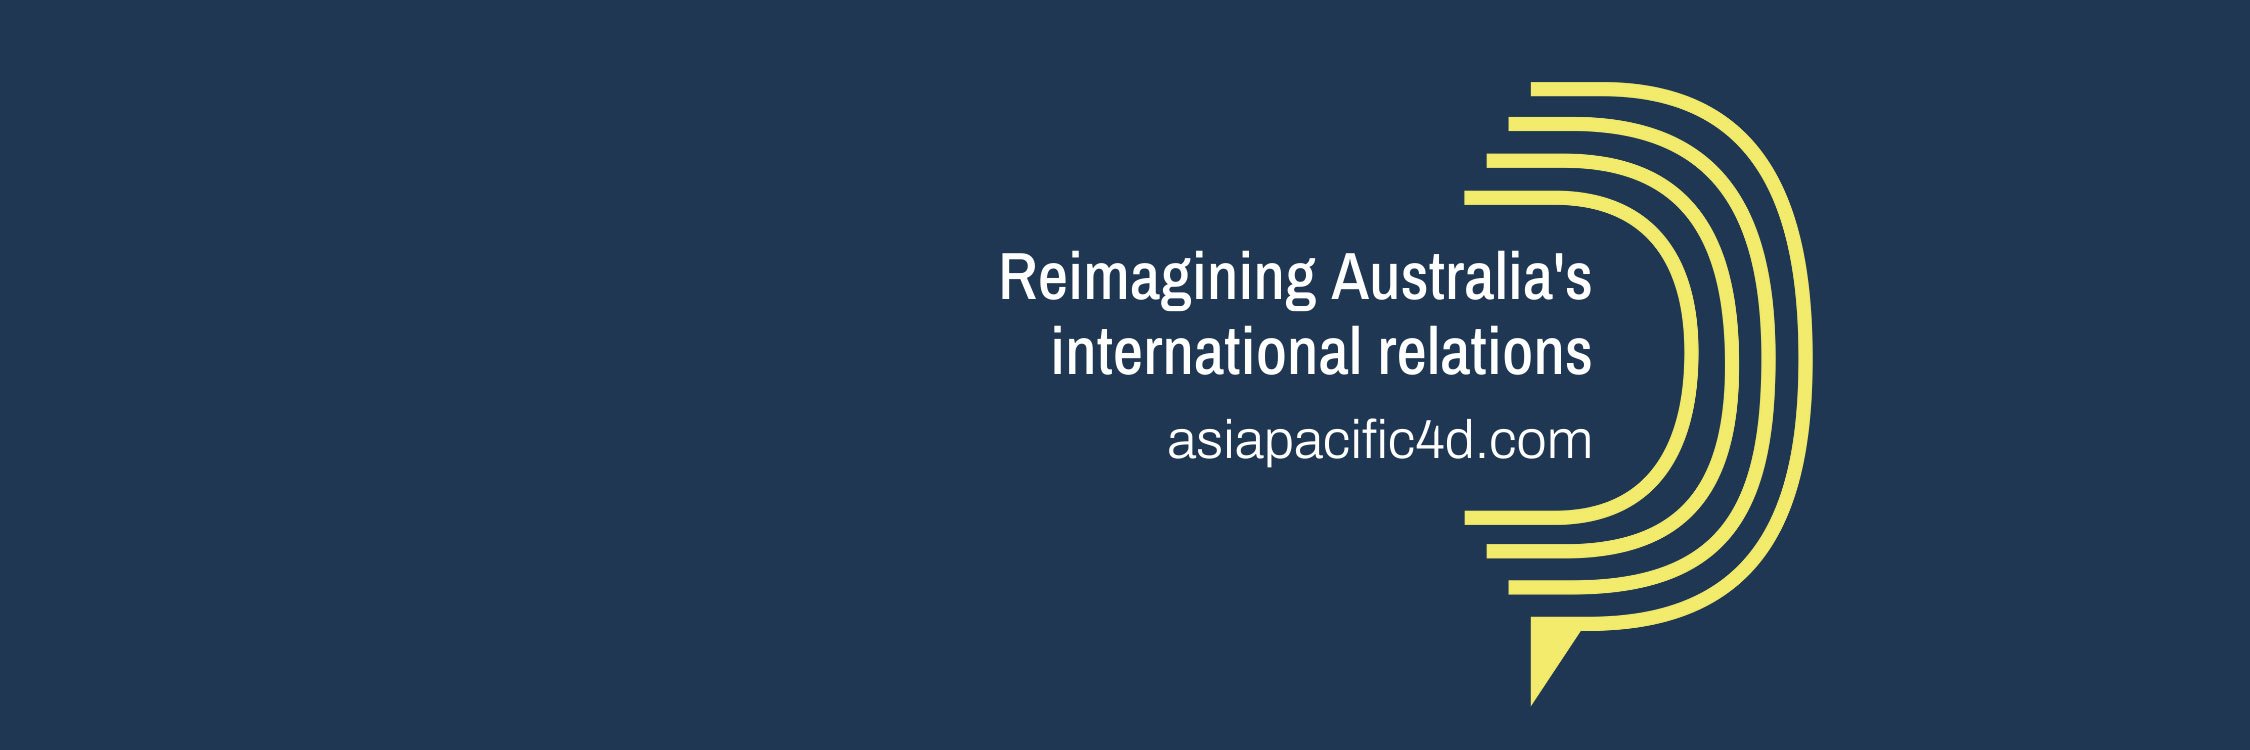 Reimagining Australia's international relations - AP4D banner